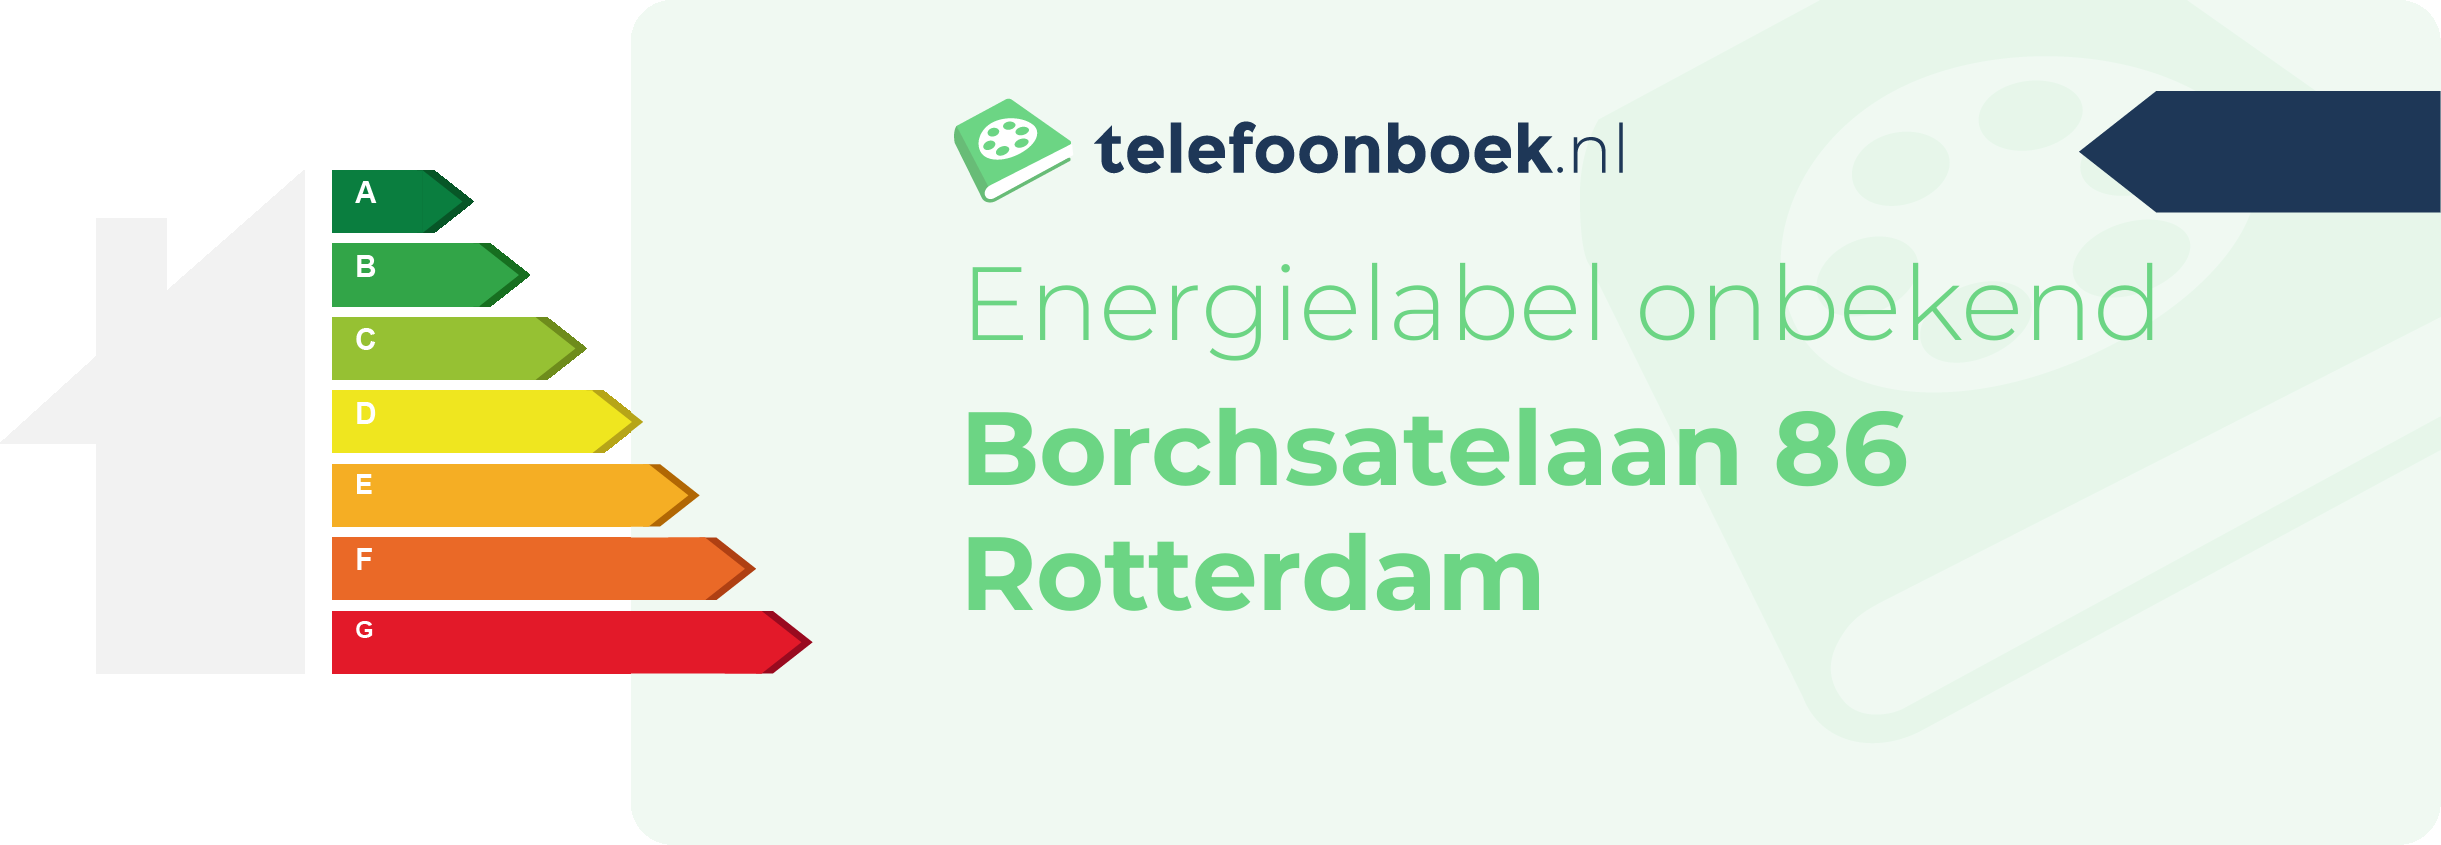 Energielabel Borchsatelaan 86 Rotterdam